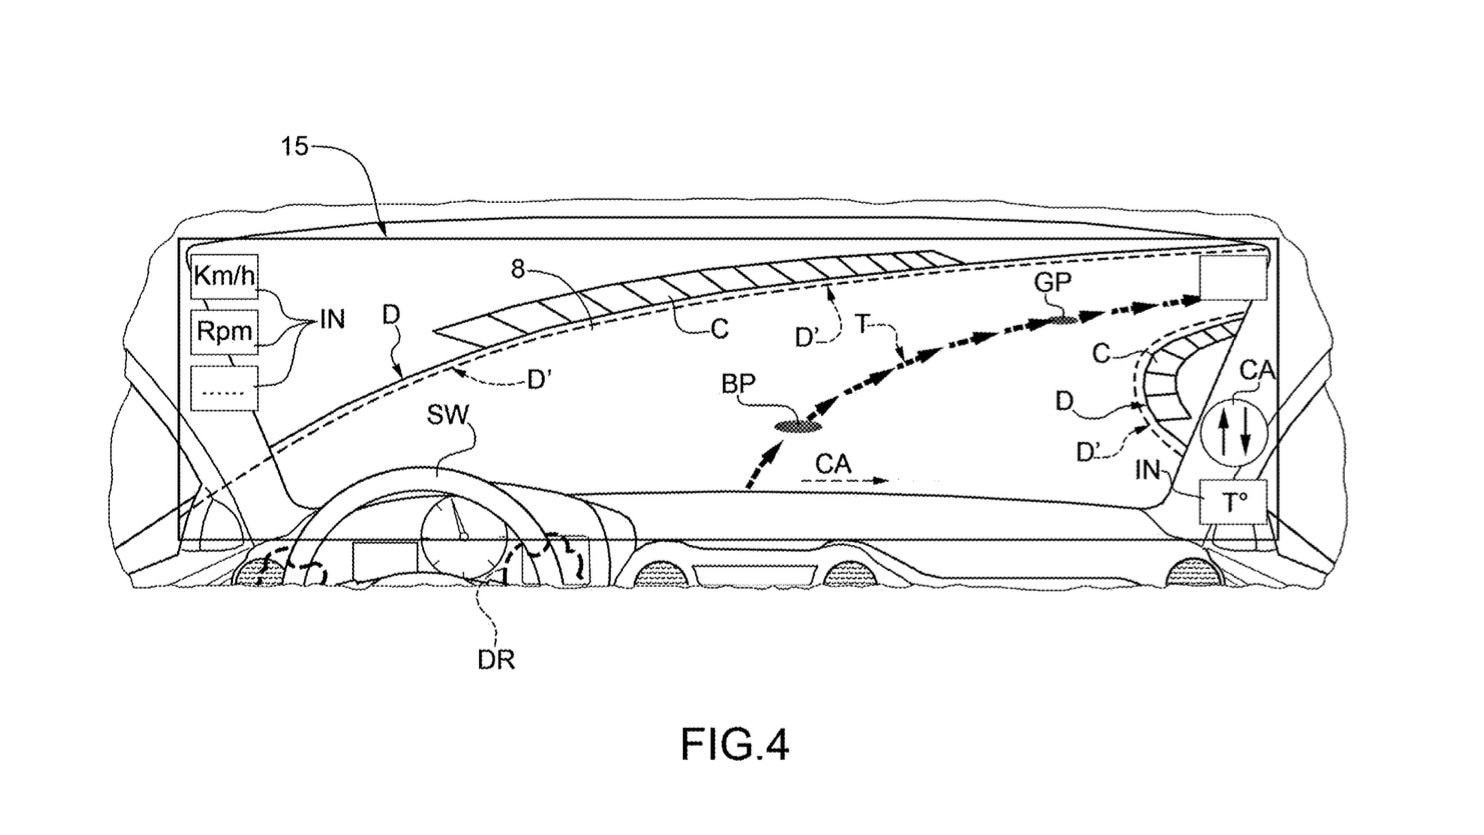 Ferrari AR driver assistance system patent image